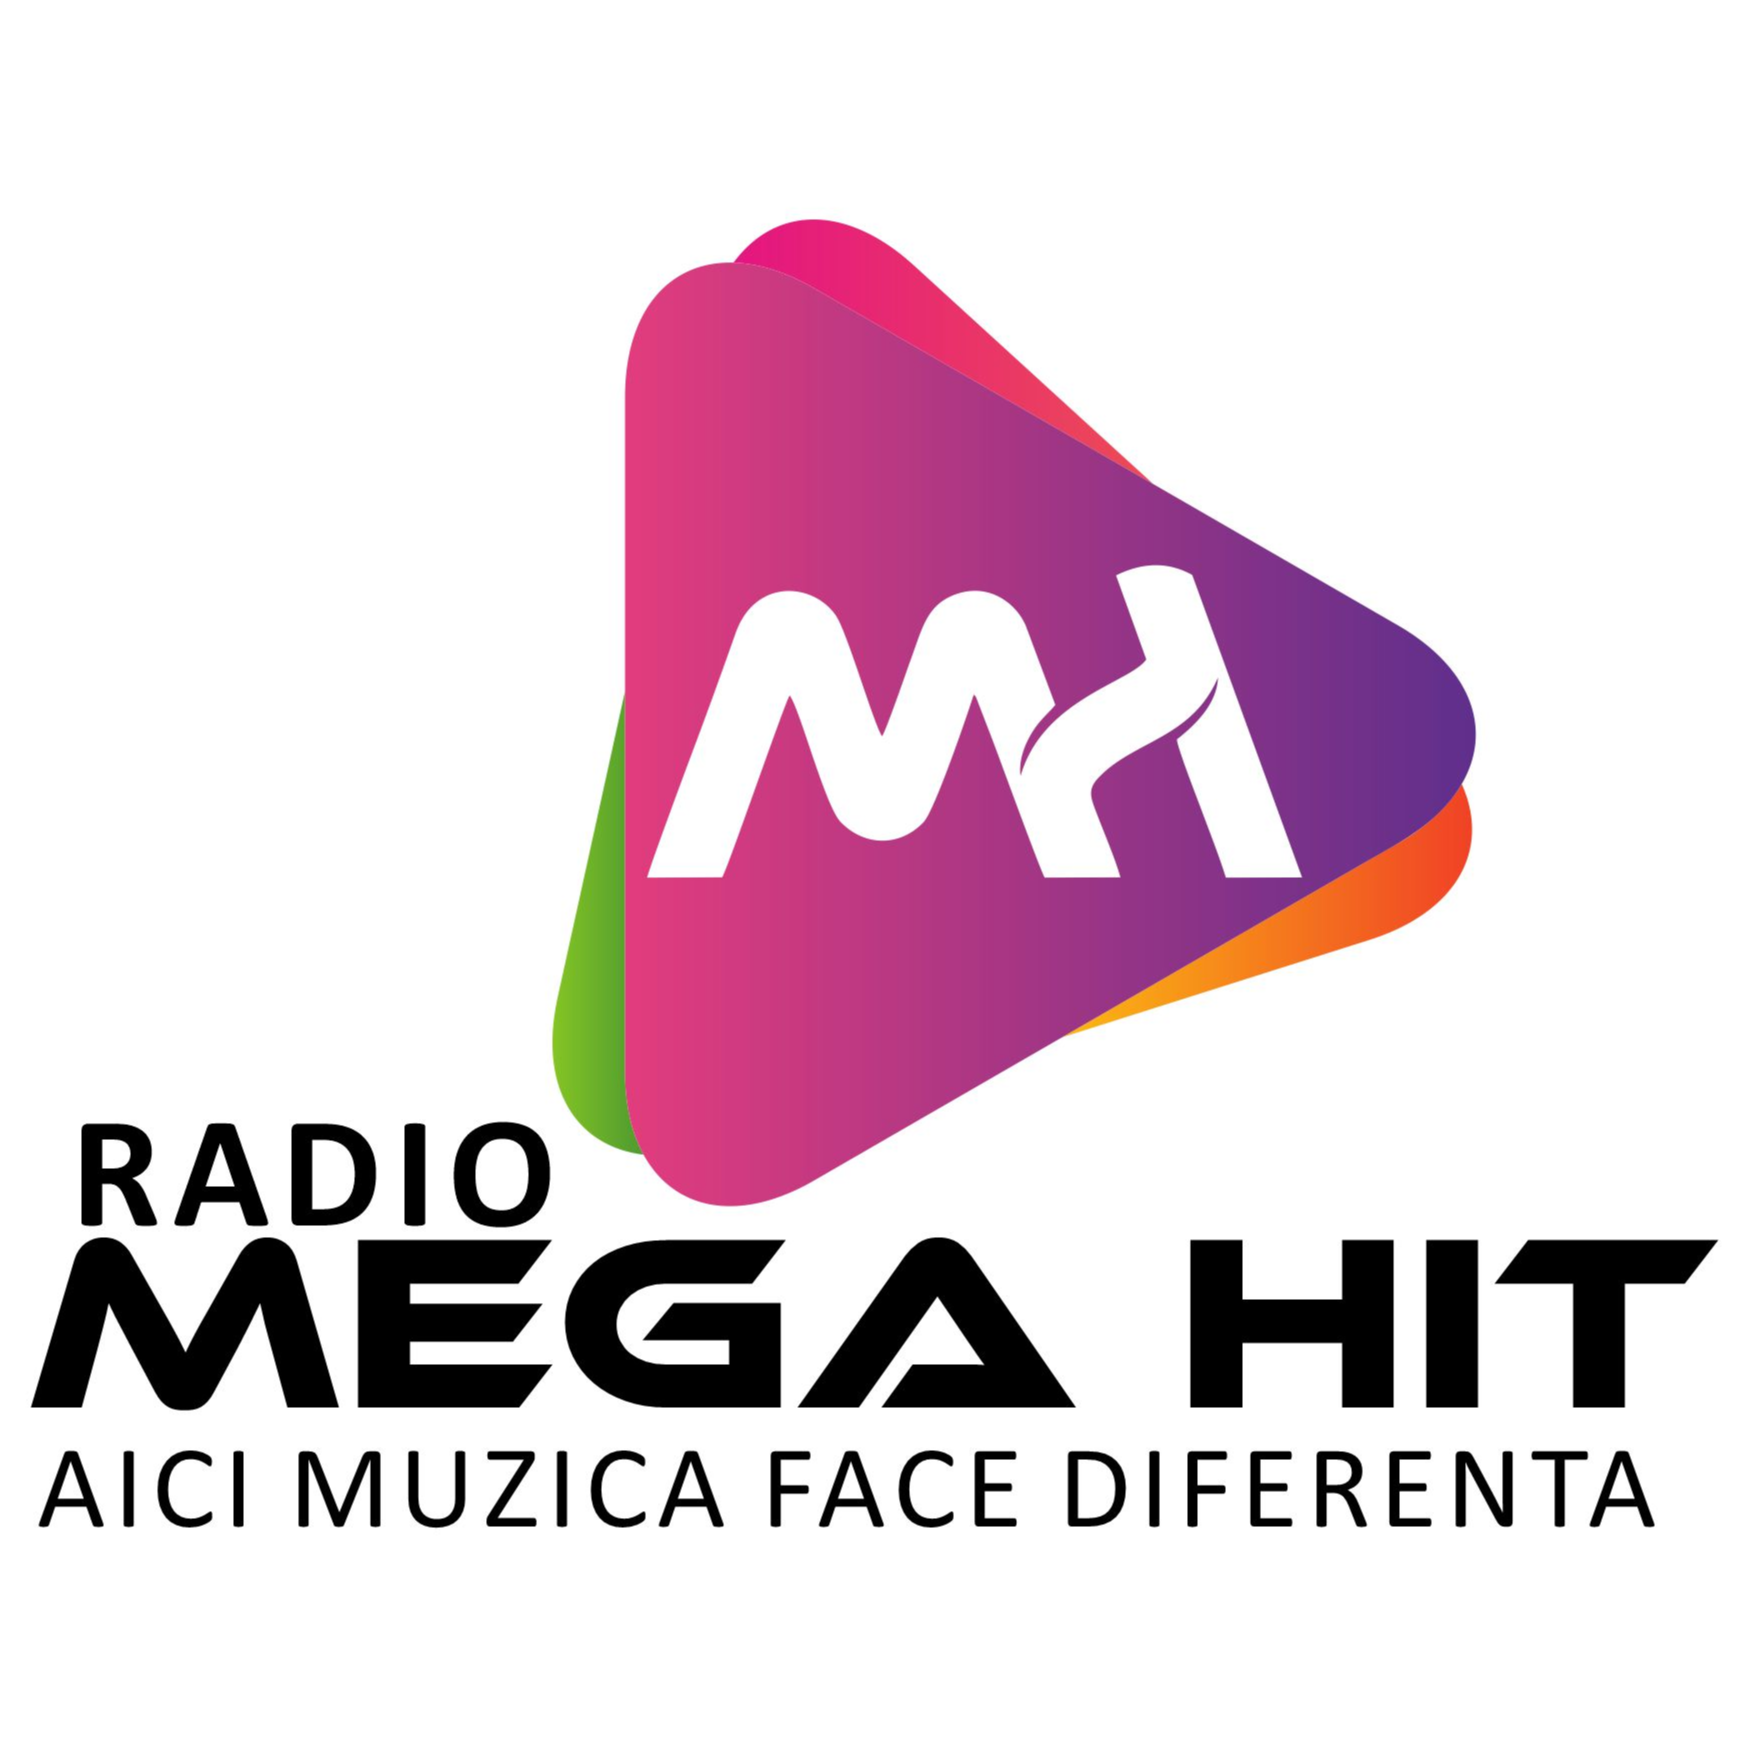 Radio Mega-HiT Romania